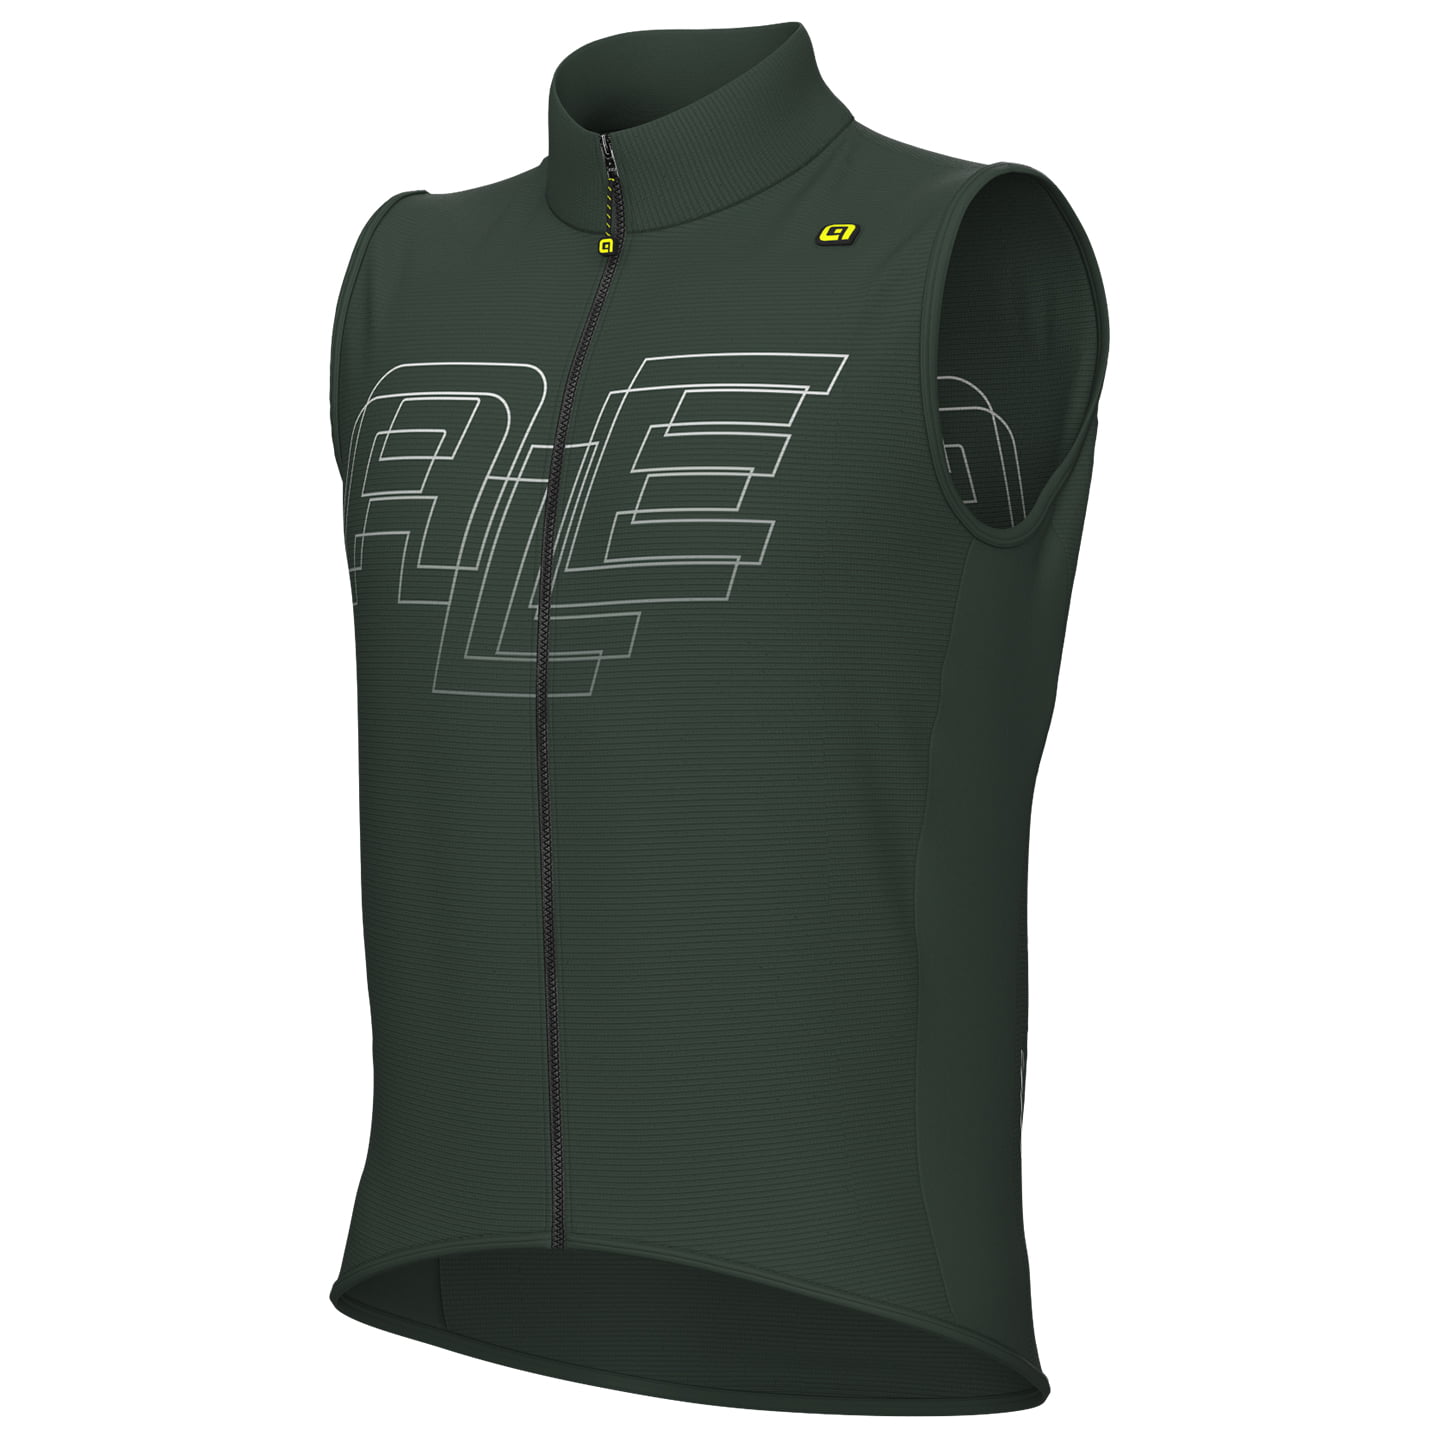 Wind Vest, for men, size S, Cycling vest, Bike gear